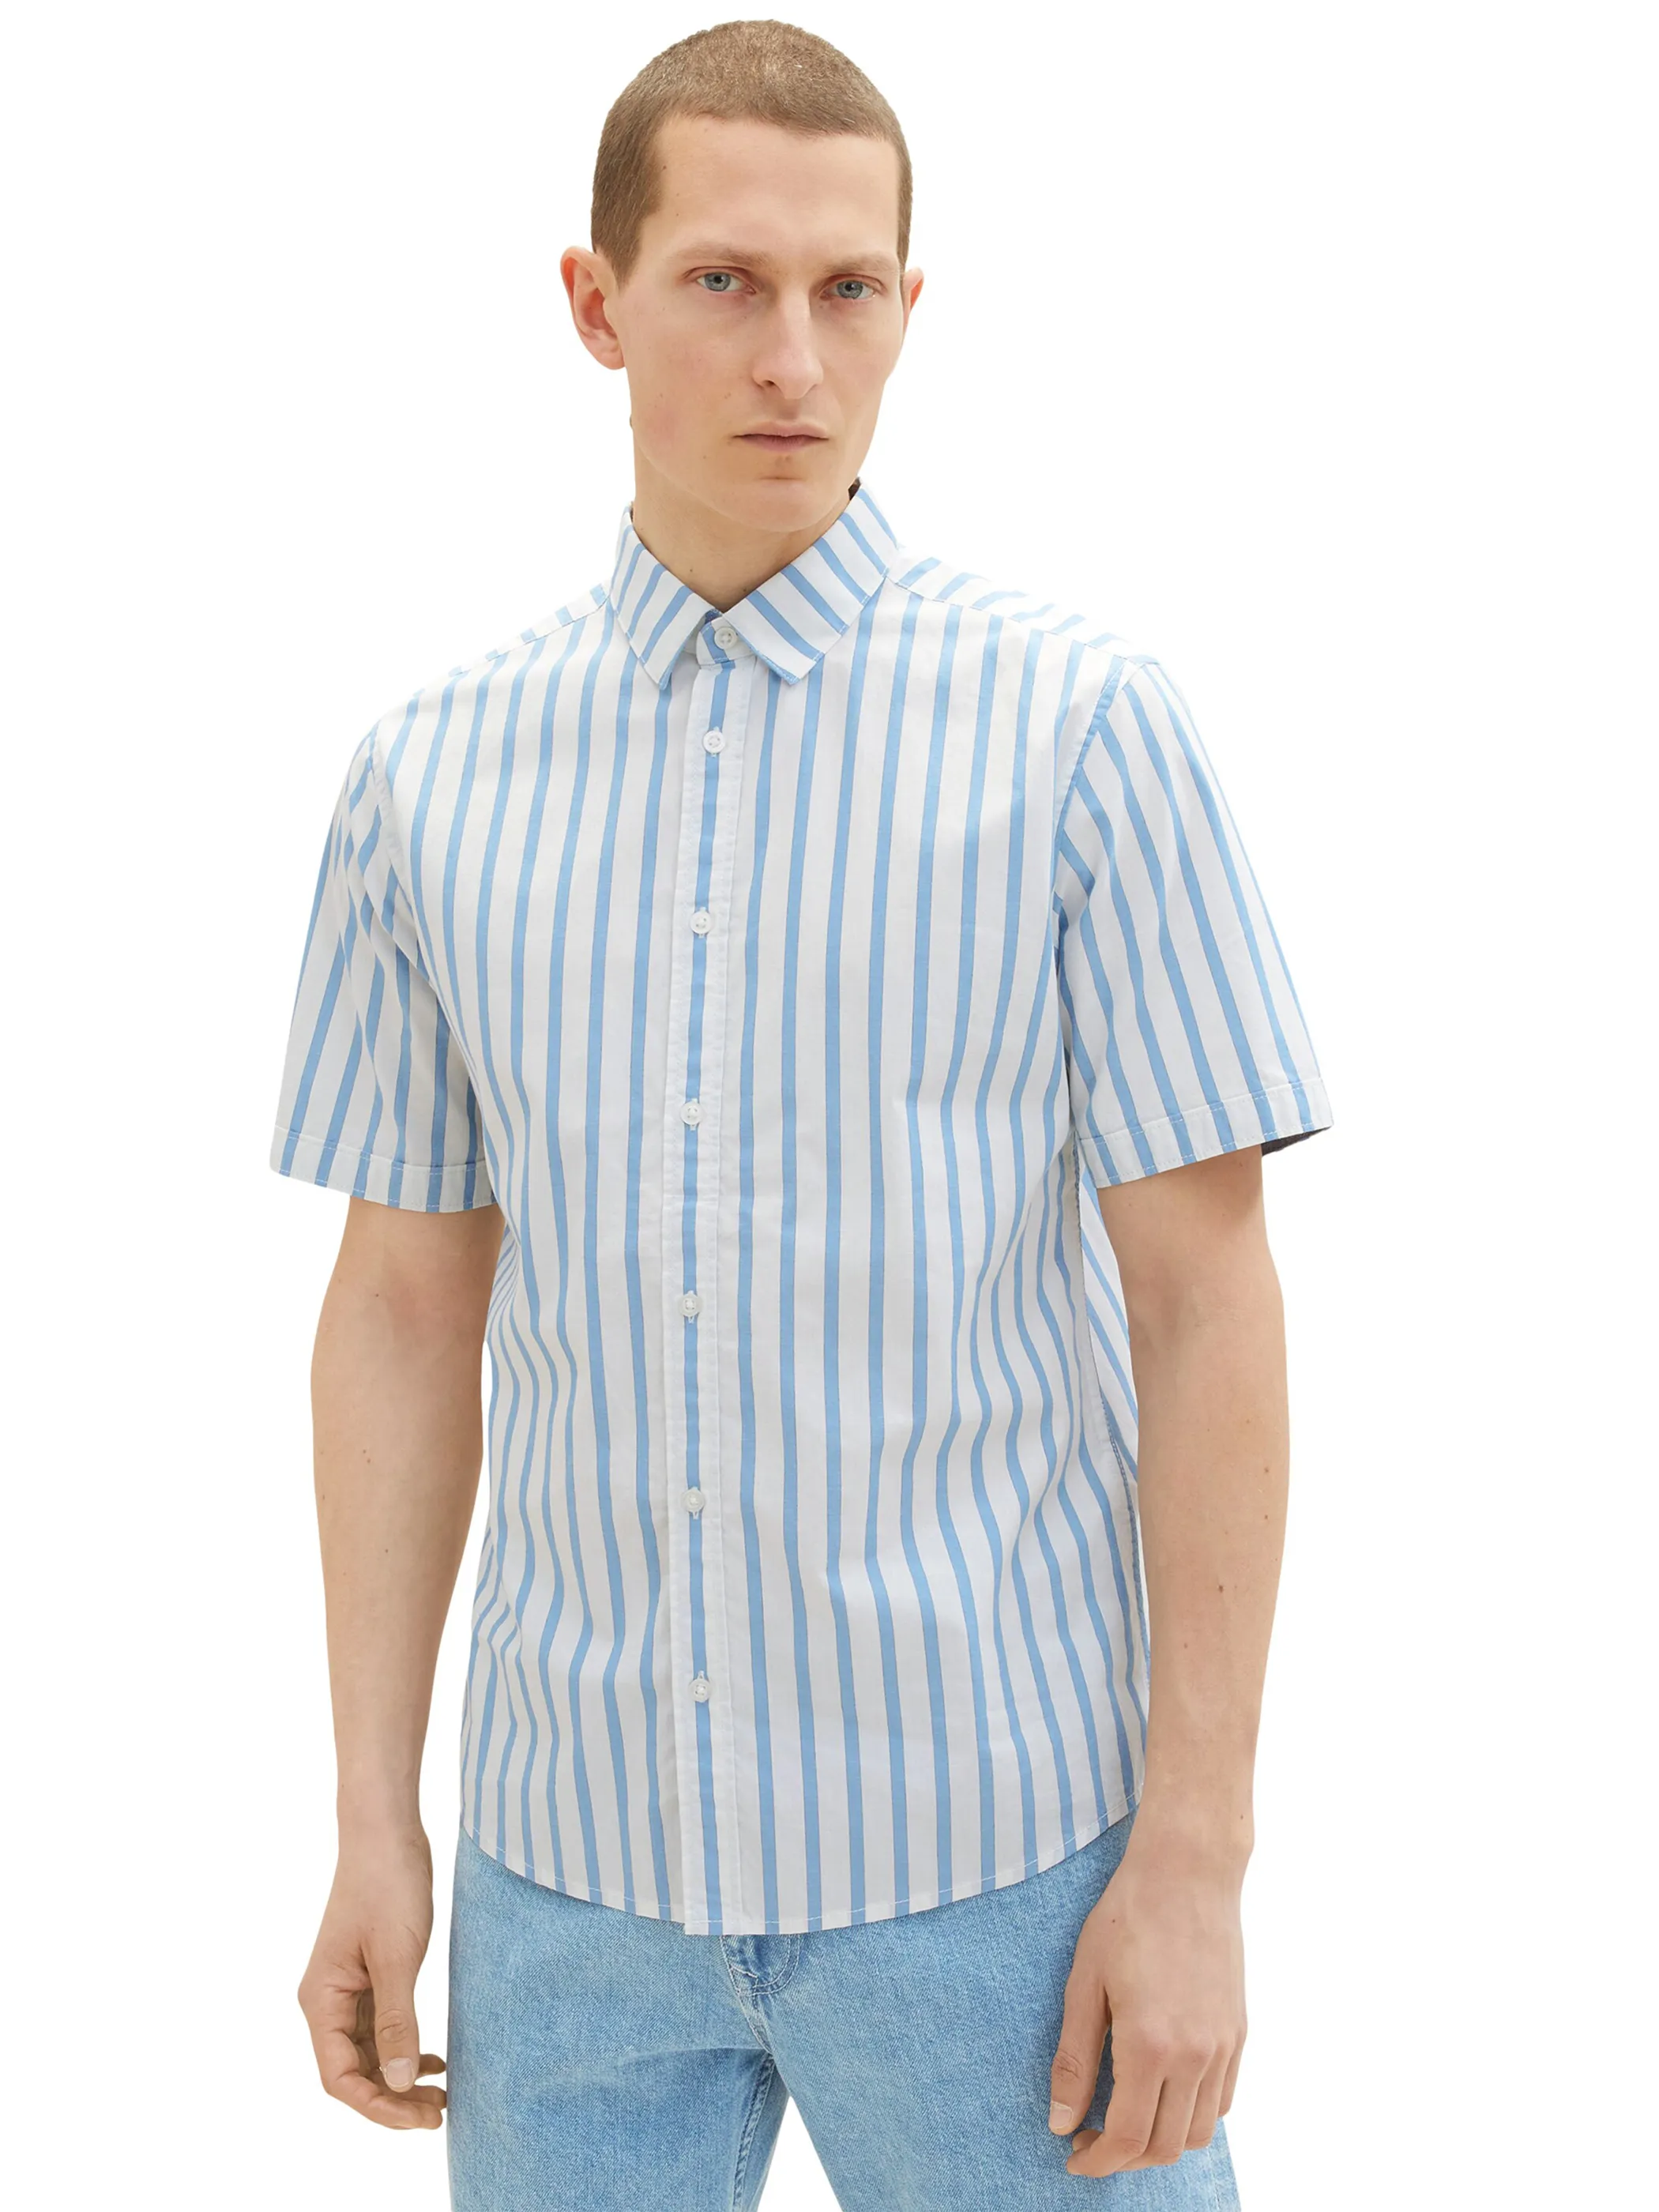 Tom Tailor 1037282 striped shirt Blau 880533 31789 4